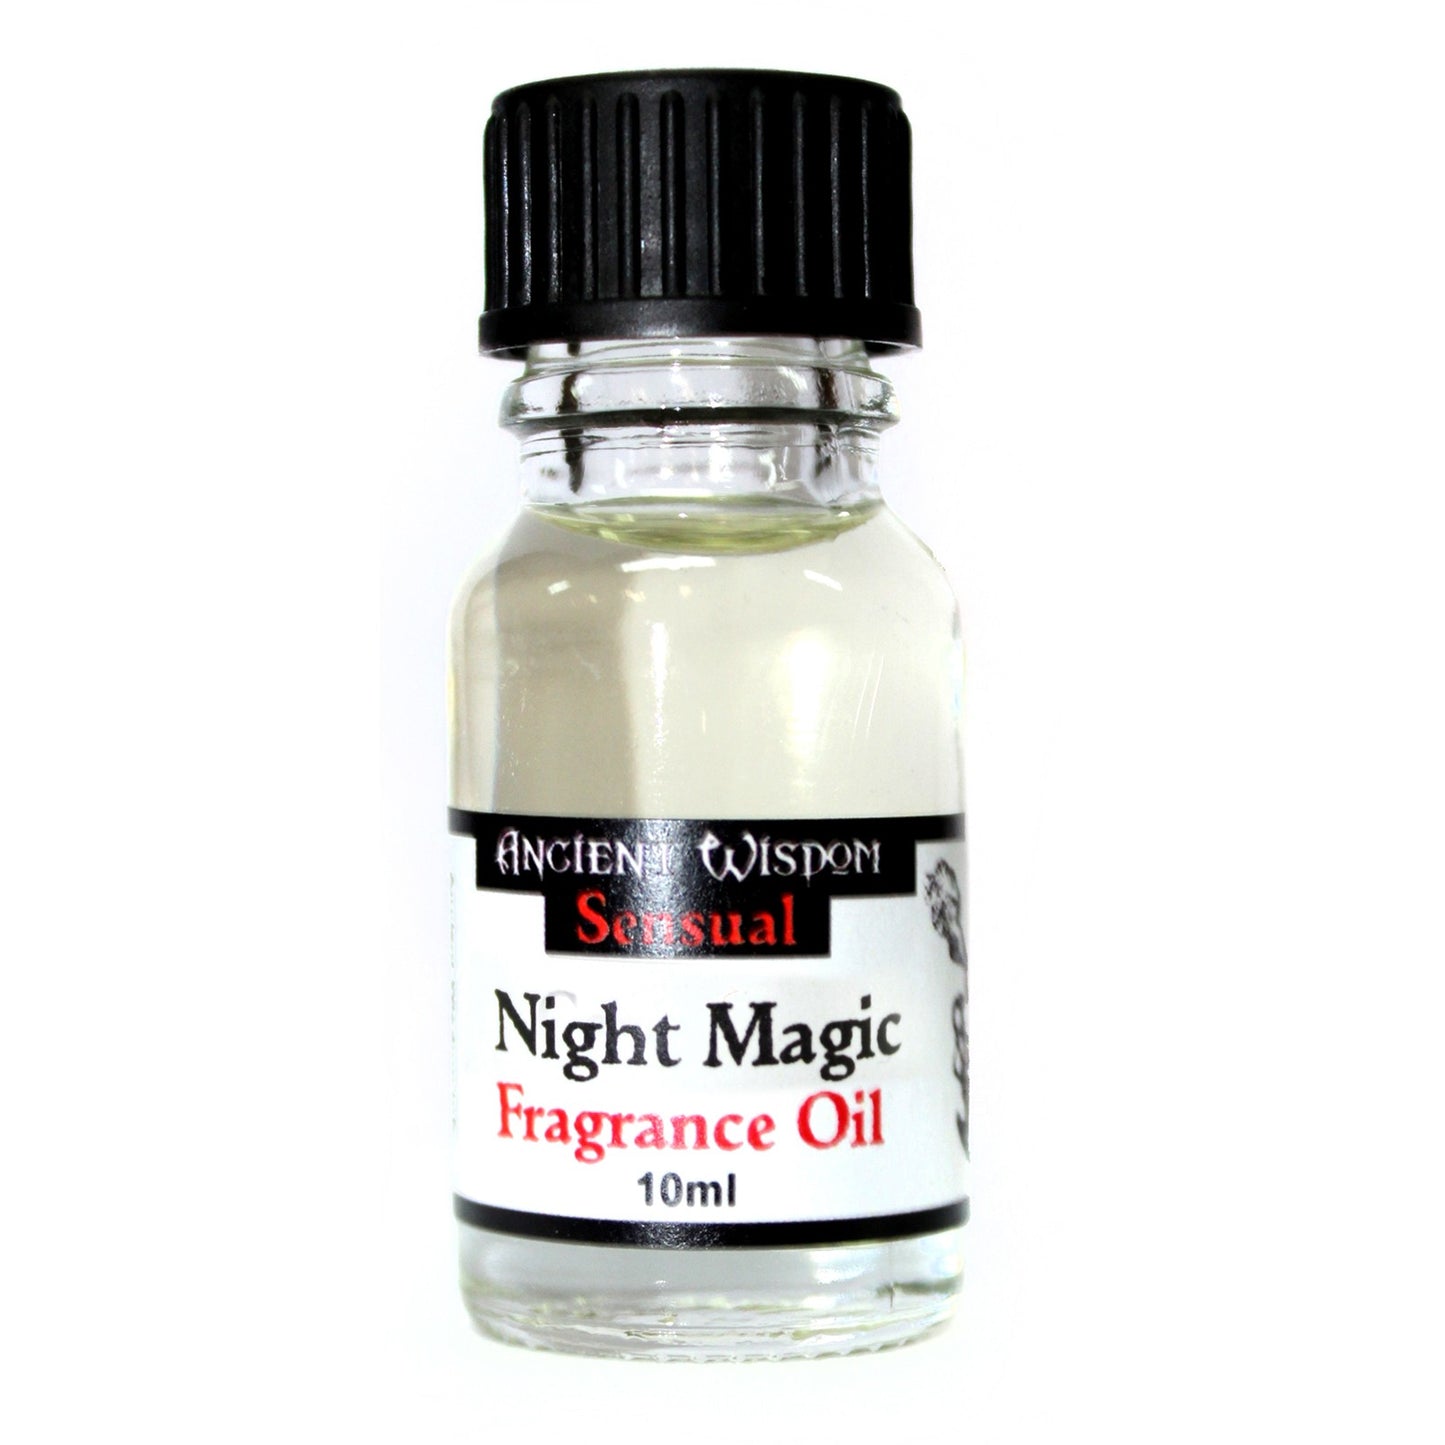 10ml Night Magic Fragrance Oil